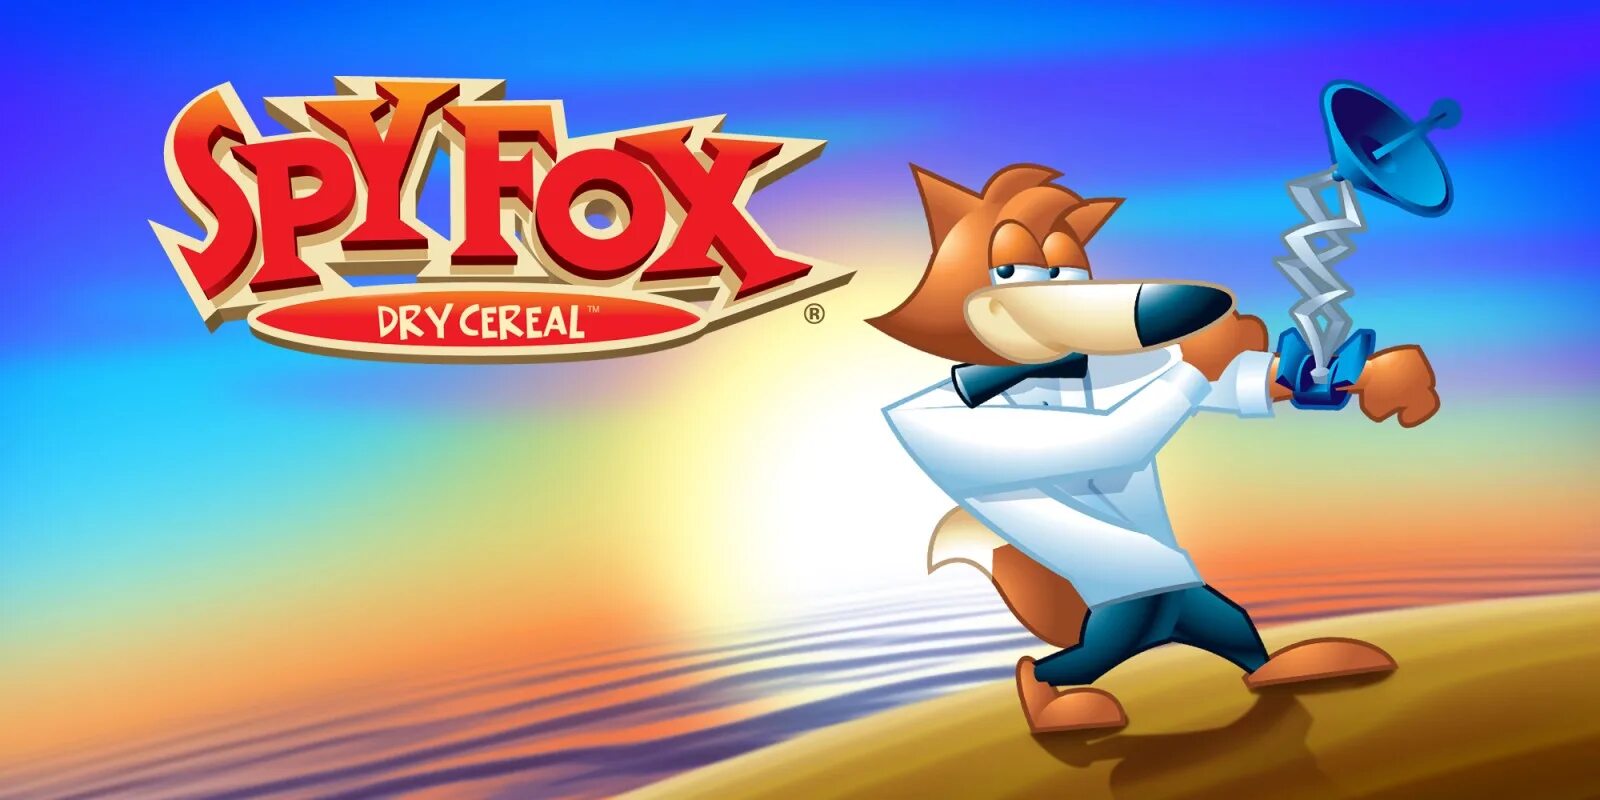 Fox rule. Spy Fox игра. Spy Fox Dry Cereal. Fox in Dry Cereal. Spy Fox in "Dry Cereal".